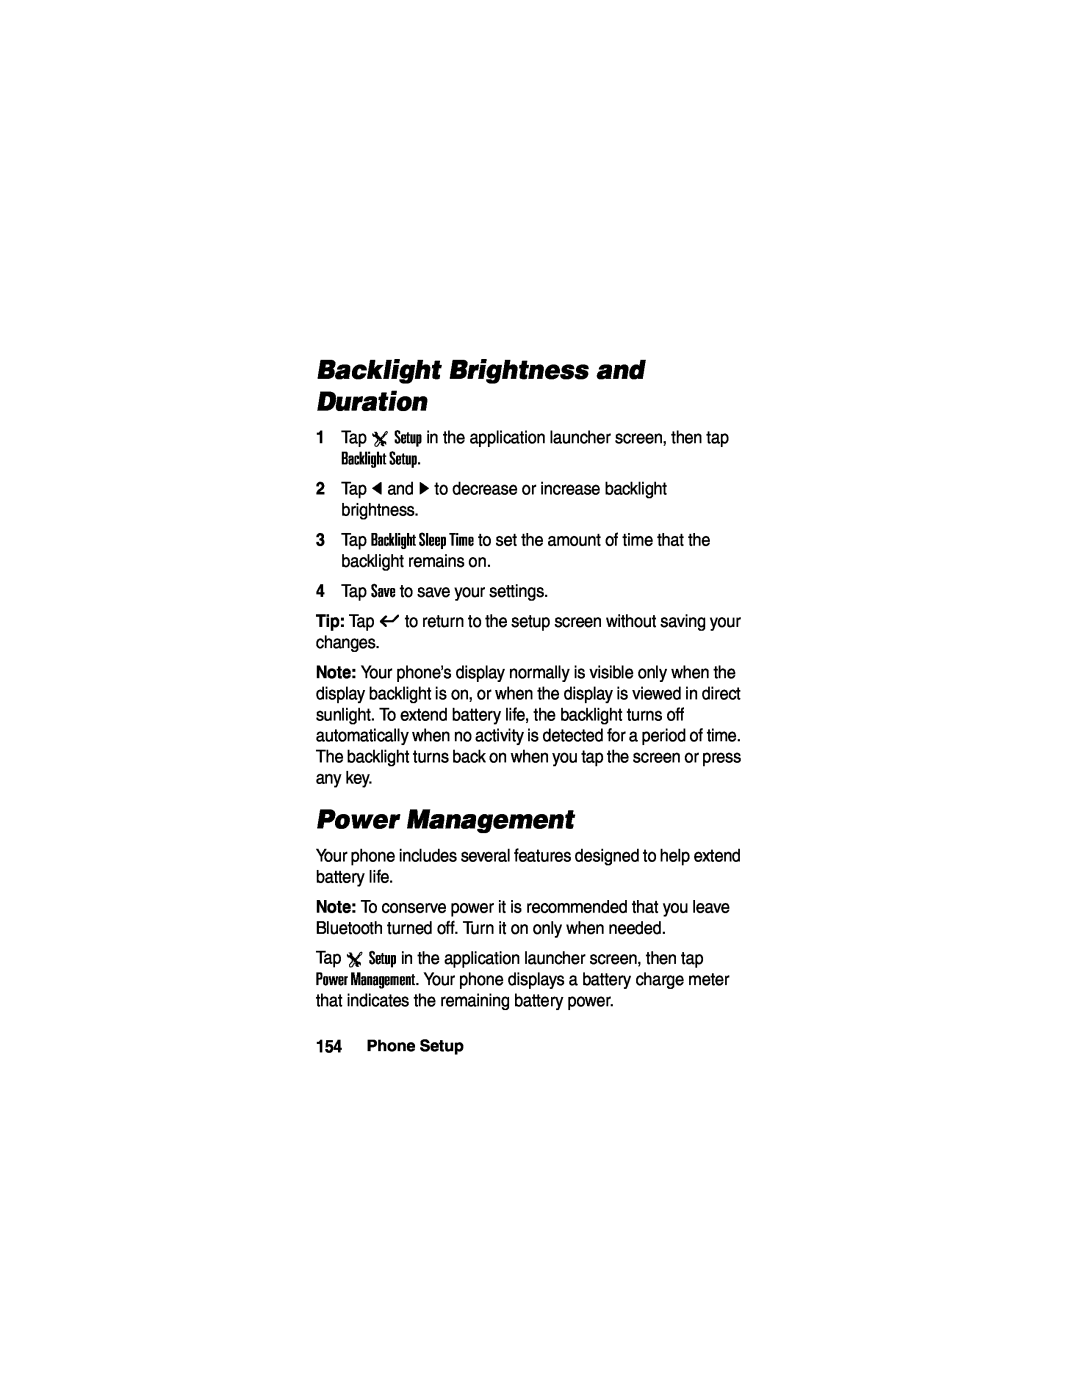 Motorola A780 manual Backlight Brightness and Duration, Power Management, Backlight Setup 